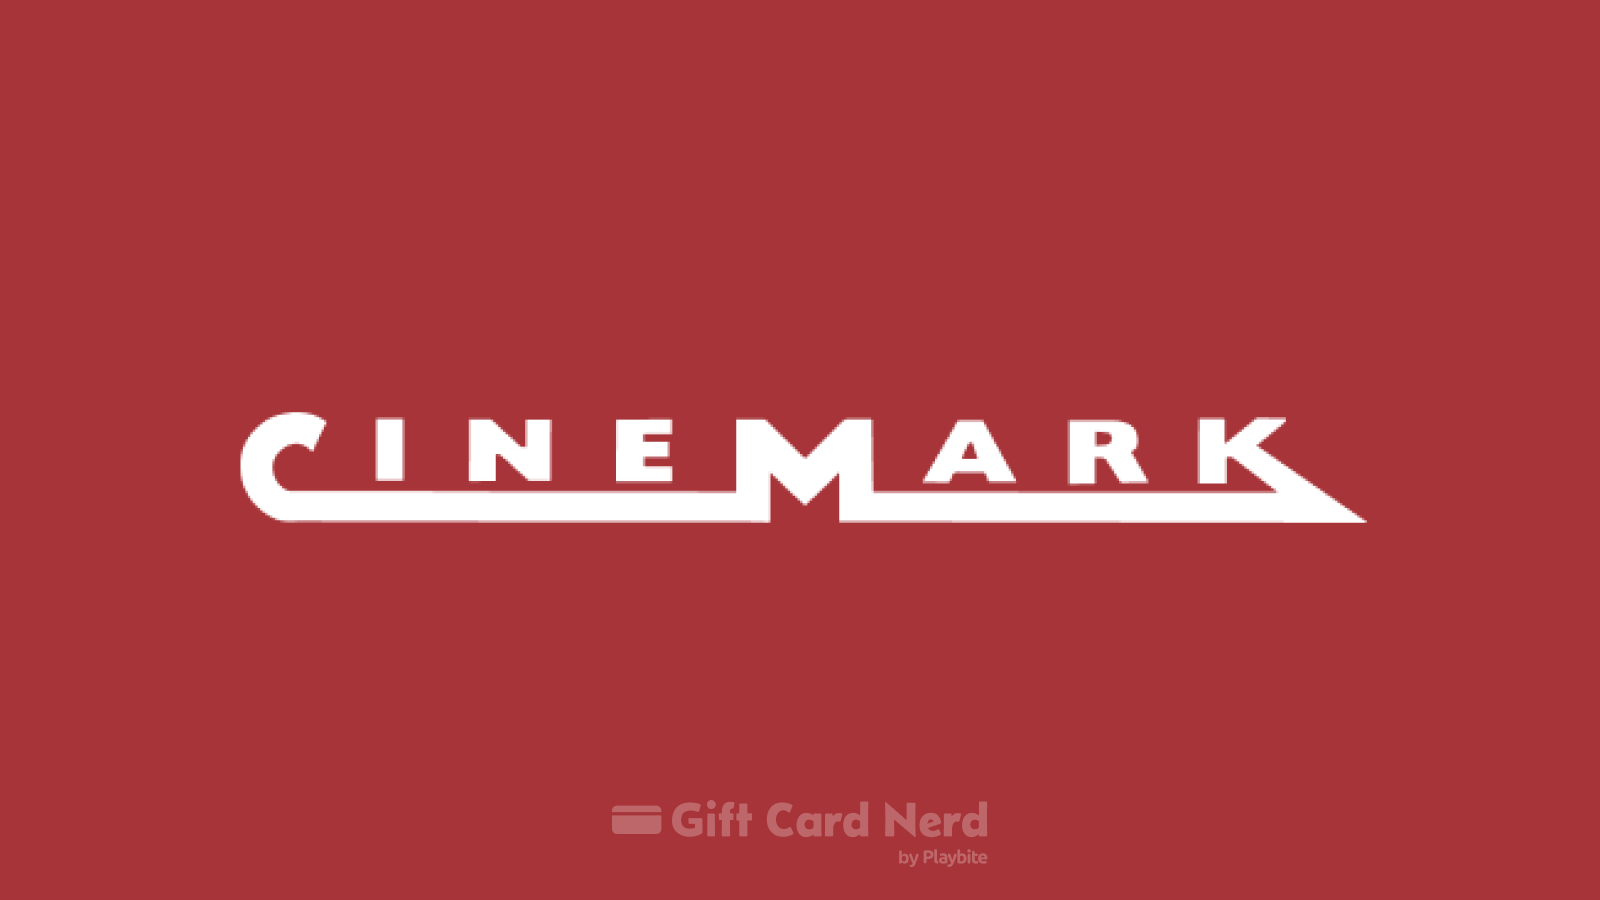 Does CVS Sell Cinemark Gift Cards?